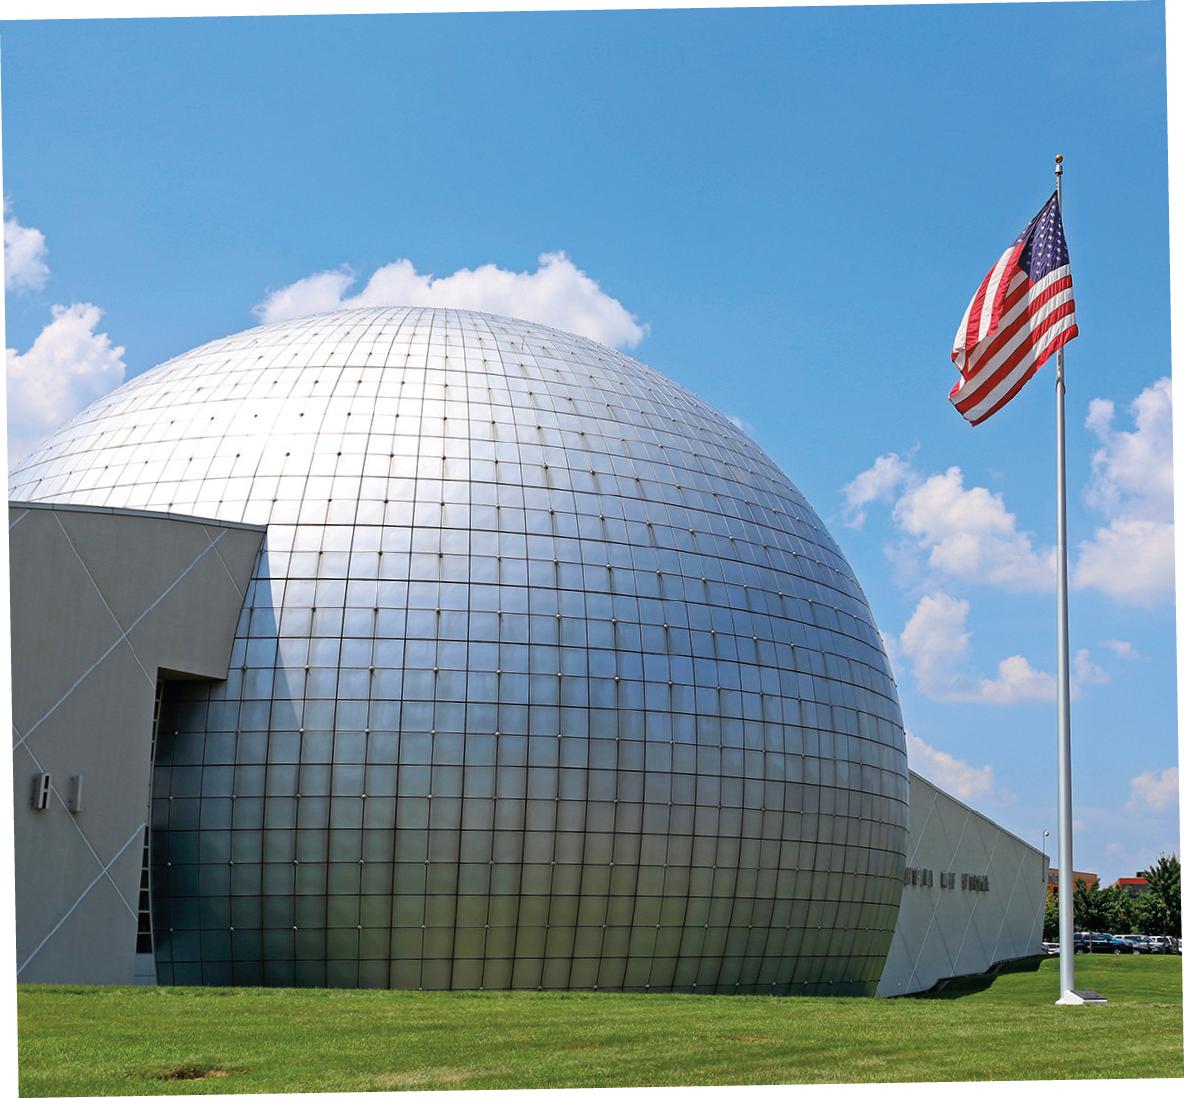 A photograph of the exterior of Naismith Memorial Basketball Hall of Fame in Springfield, Mass. (Alexander Sviridov/Shutterstock)